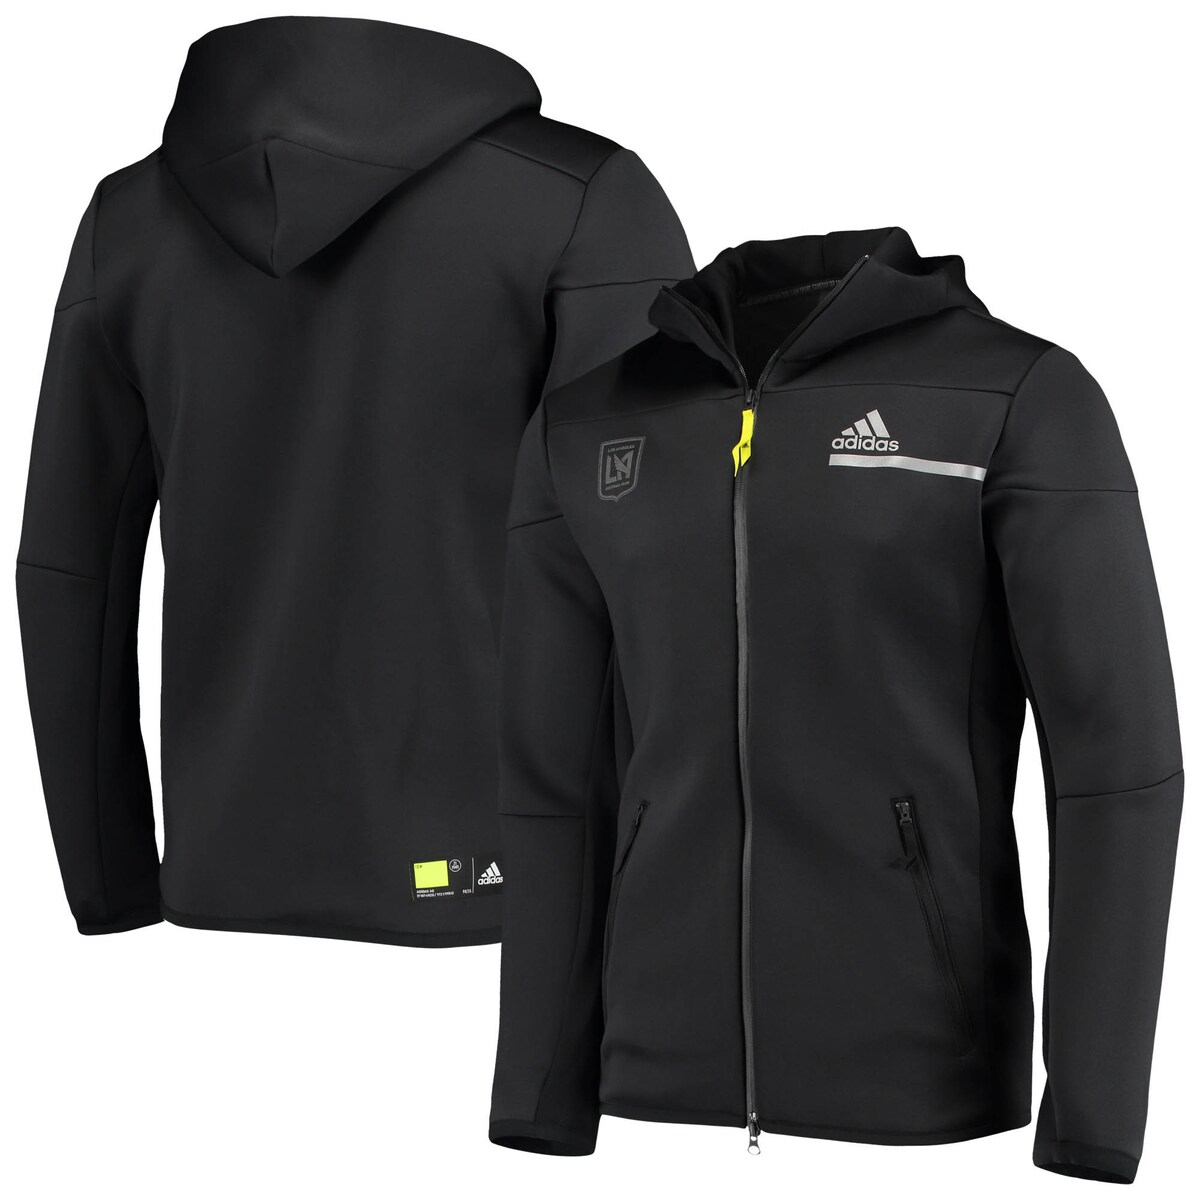 MLS LAFC フルジップアップ パーカー Adidas（アディダス） メンズ ブラック (ADI SS21 Men's ZNE Tech FZ Jacket)